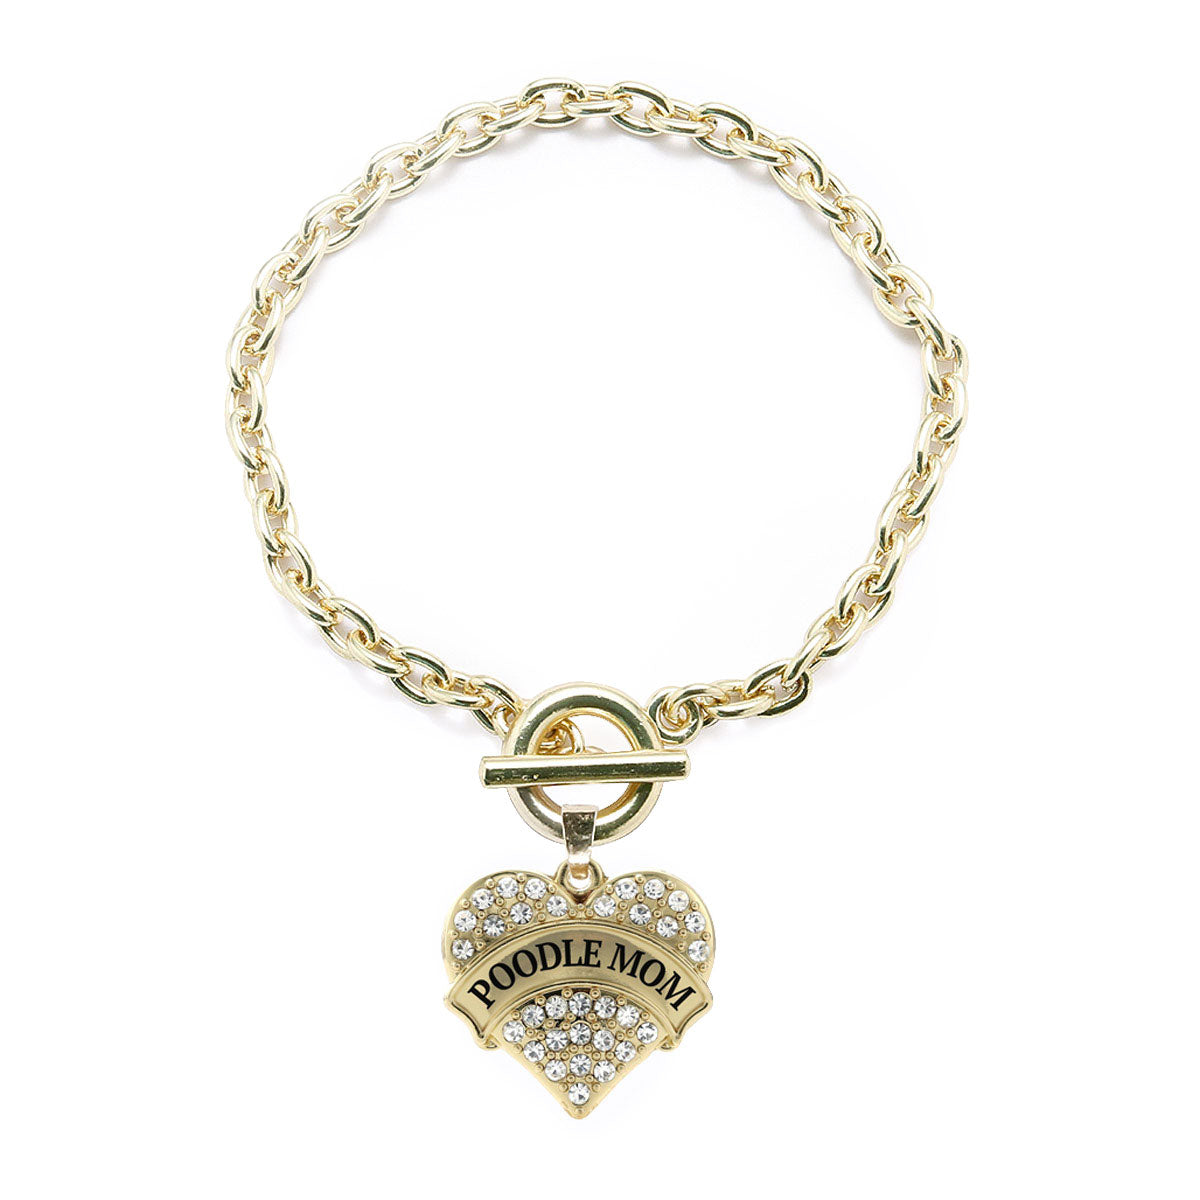 Gold Poodle Mom Pave Heart Charm Toggle Bracelet